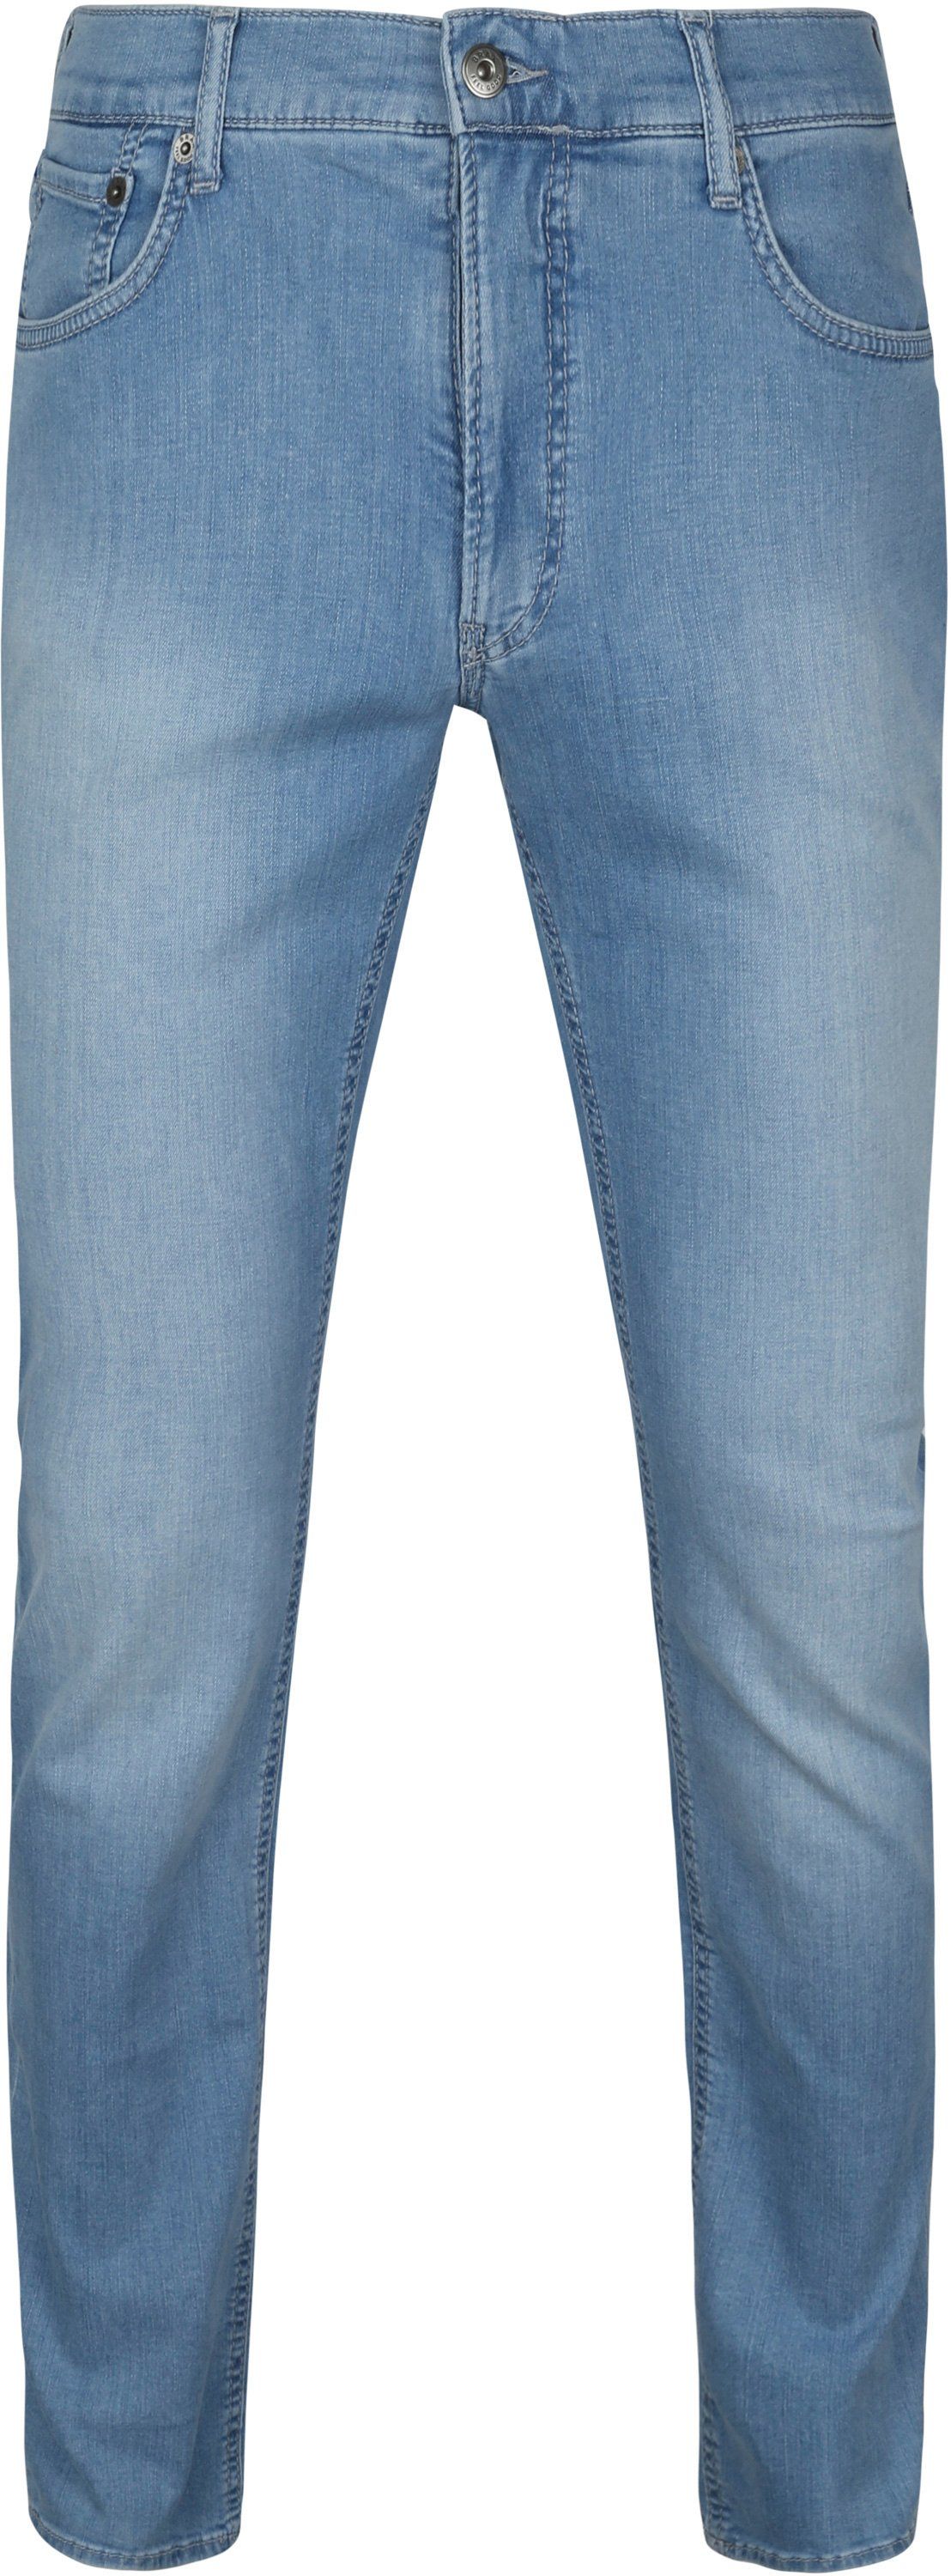 Brax Jeans Chuck Blue size W 32